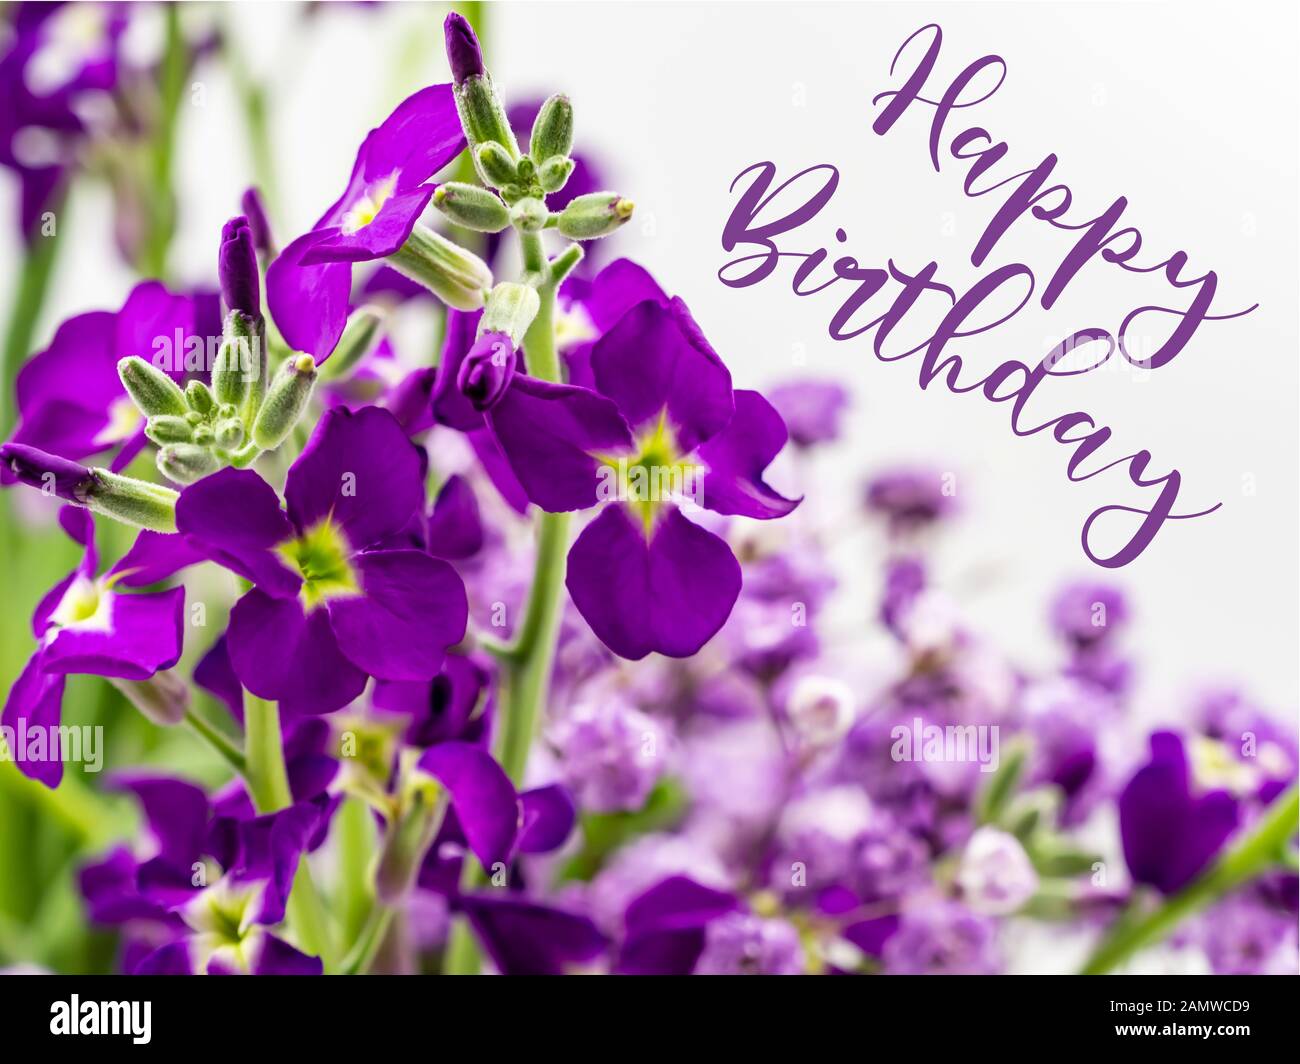 happy birthday with beautiful purple flowers 2AMWCD9